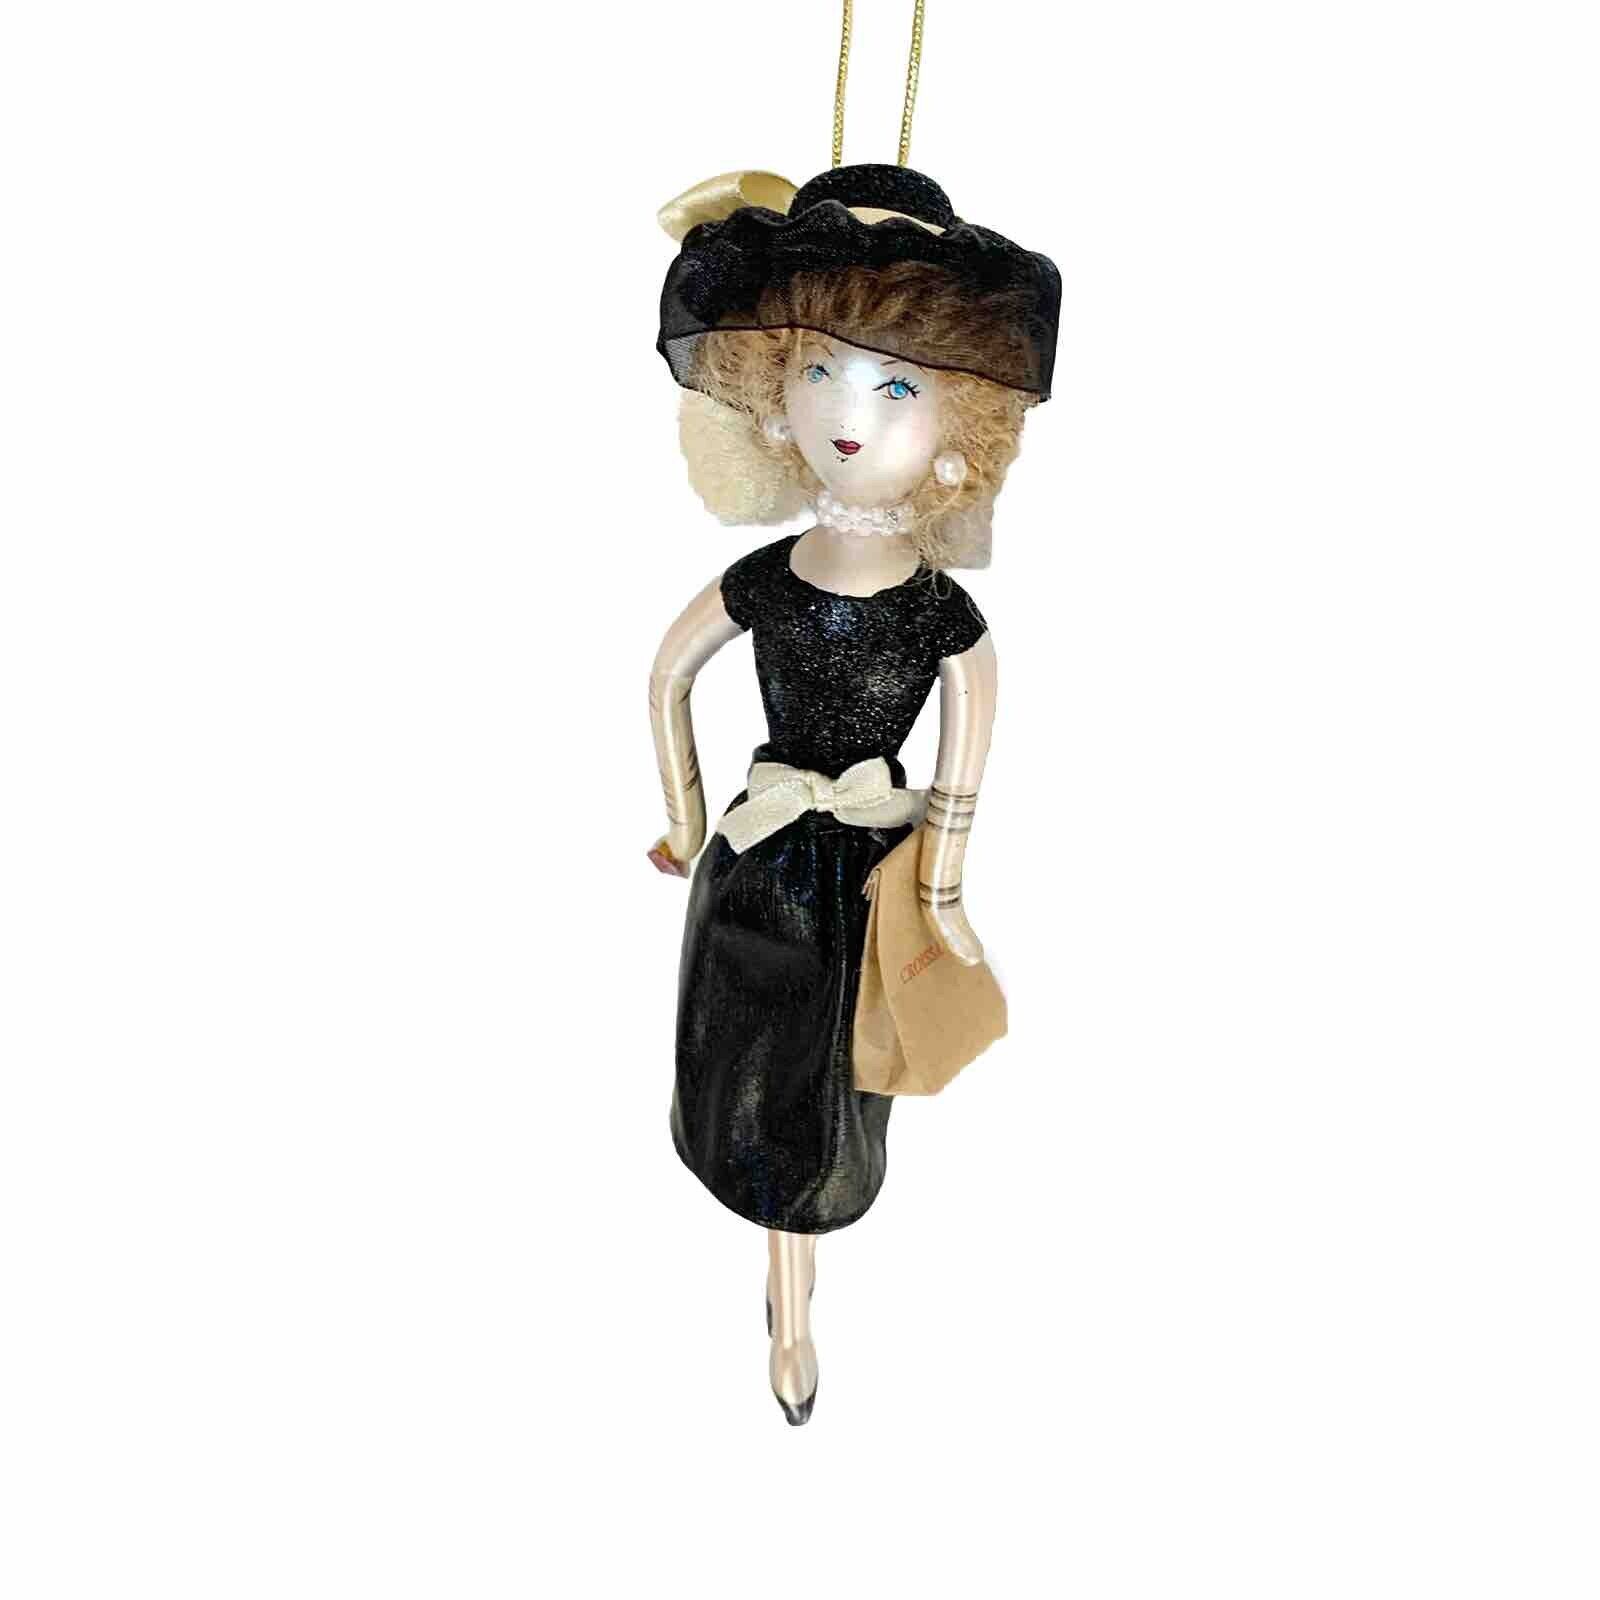 Vintage Italian Glass de Carlini Lady Shopper Ornament Croissants Black Dress